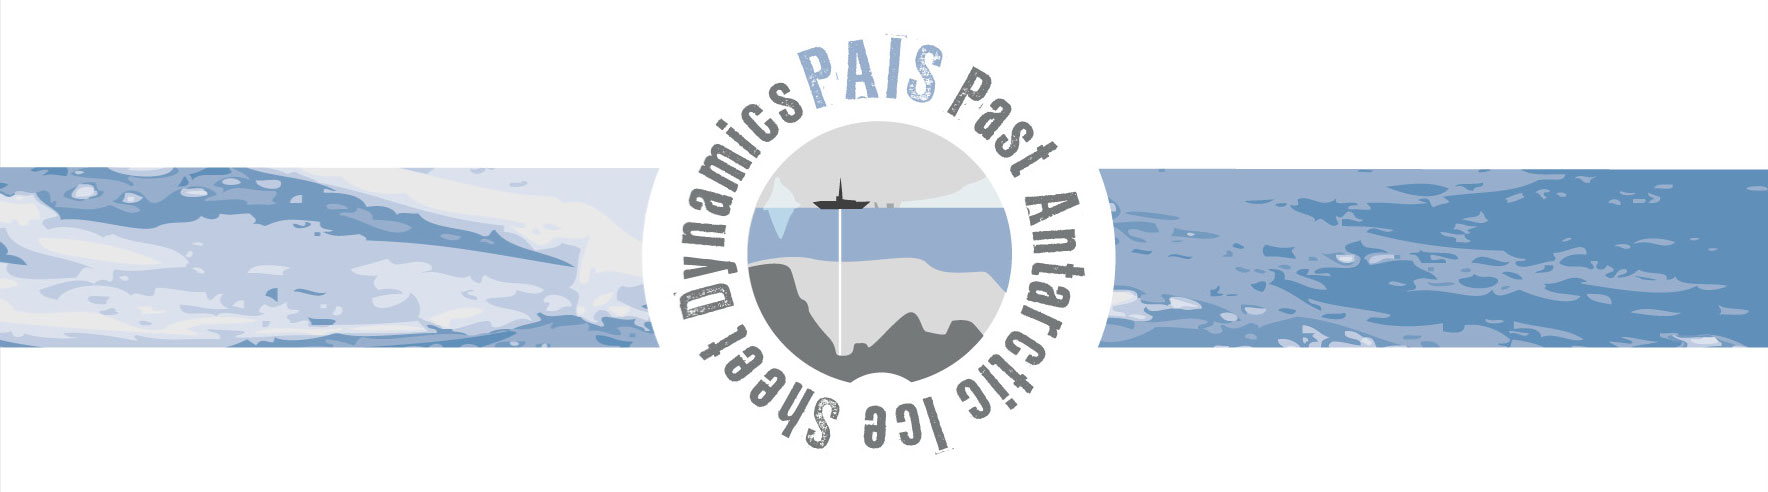 PAIS logos 2